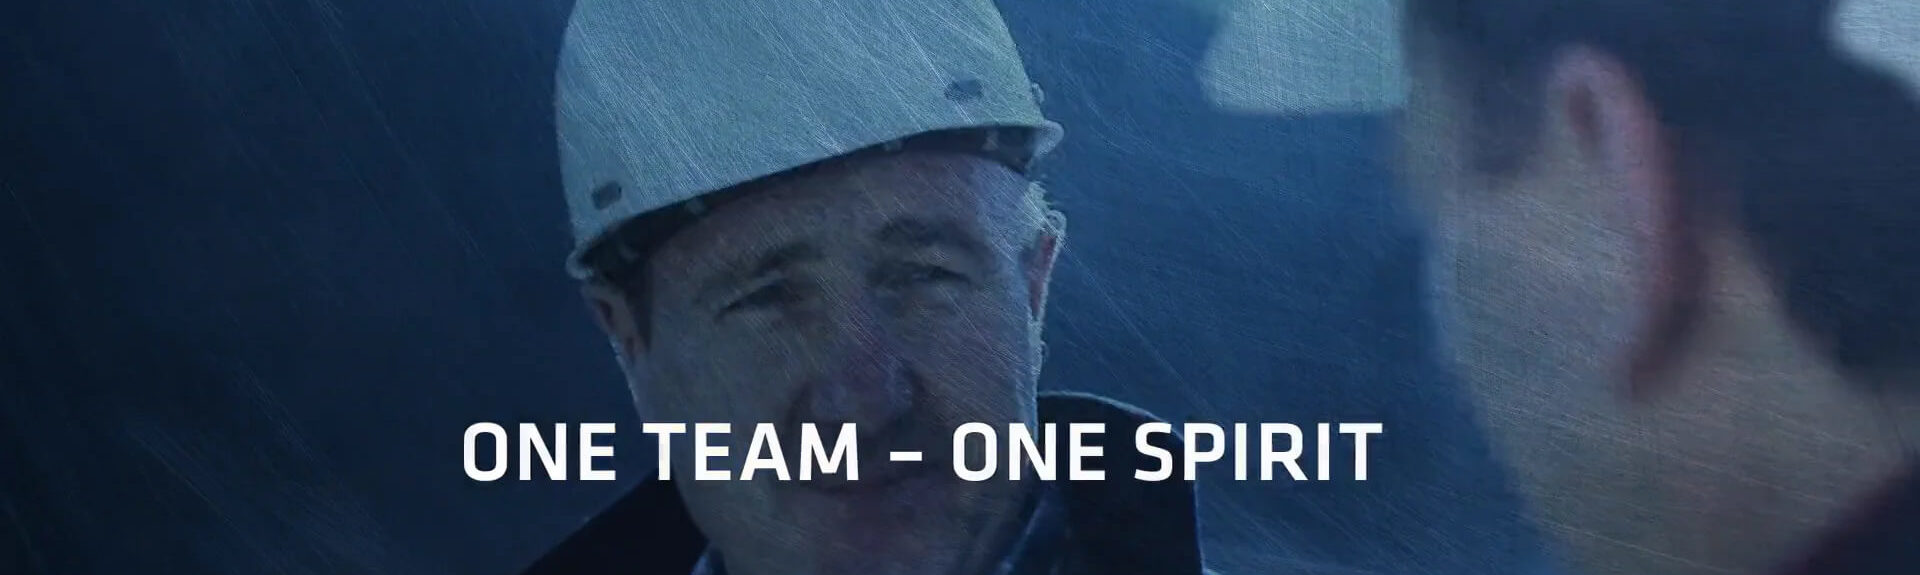 One Team - One Spirit - BEUMER Group Corporate Movie